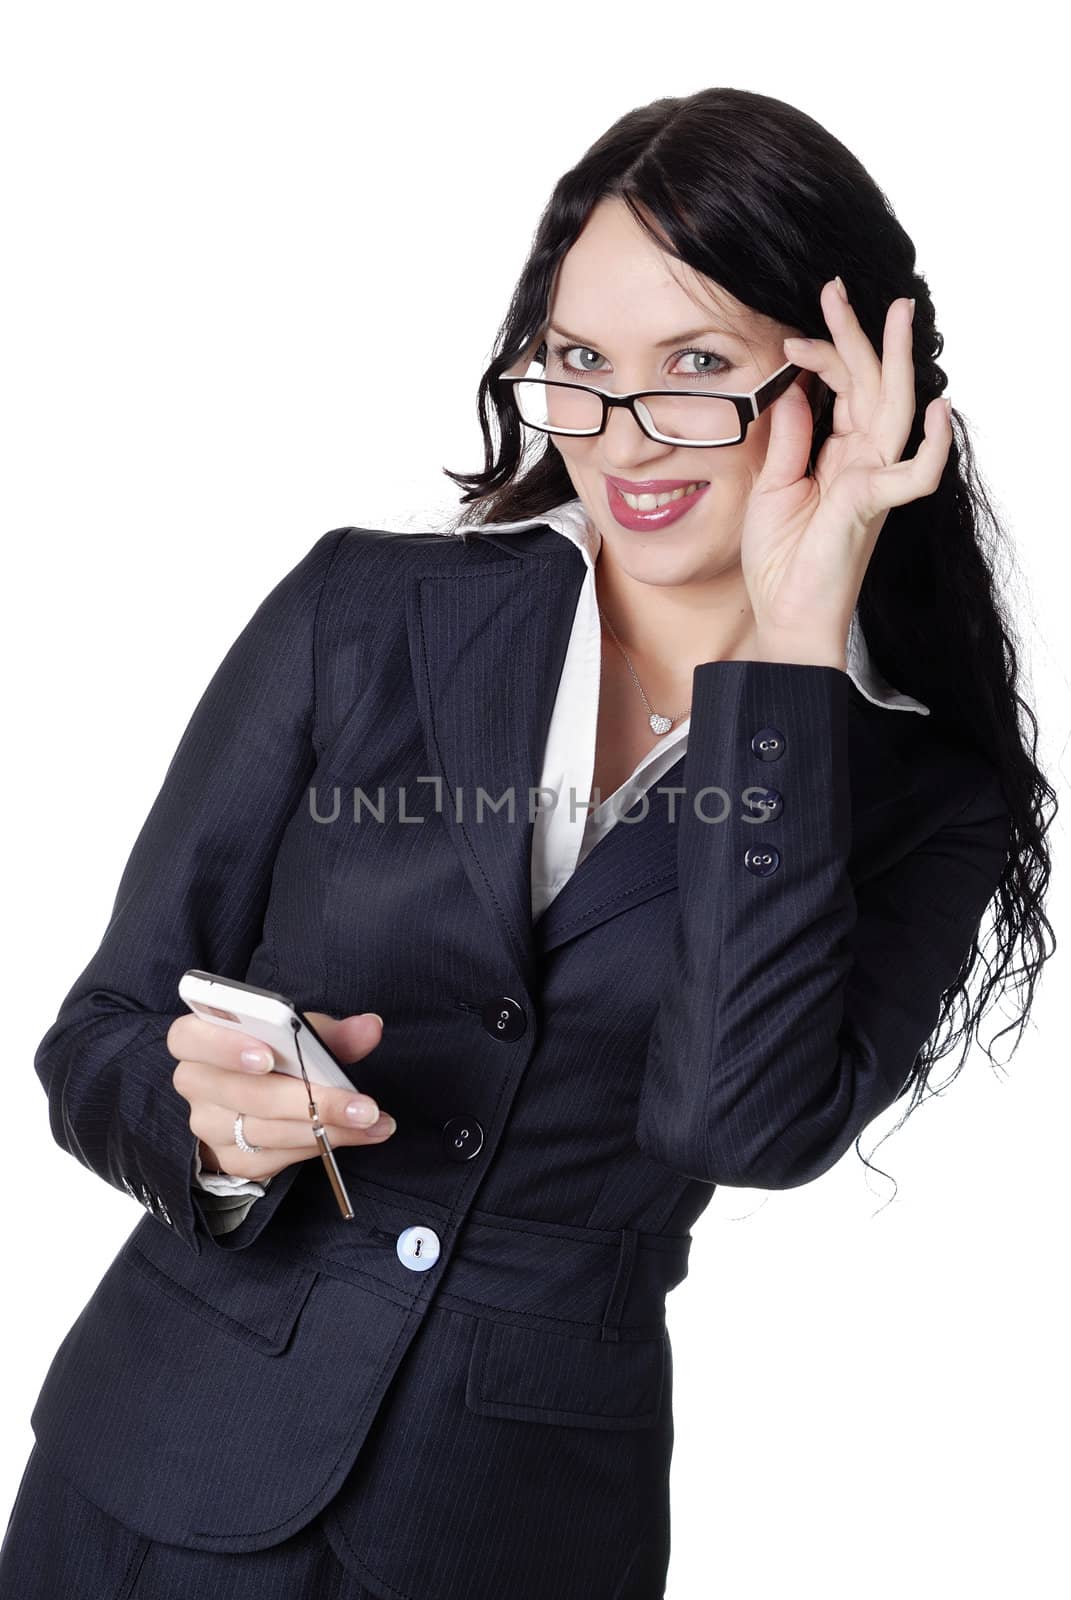 charming businesswoman by Baronerosso